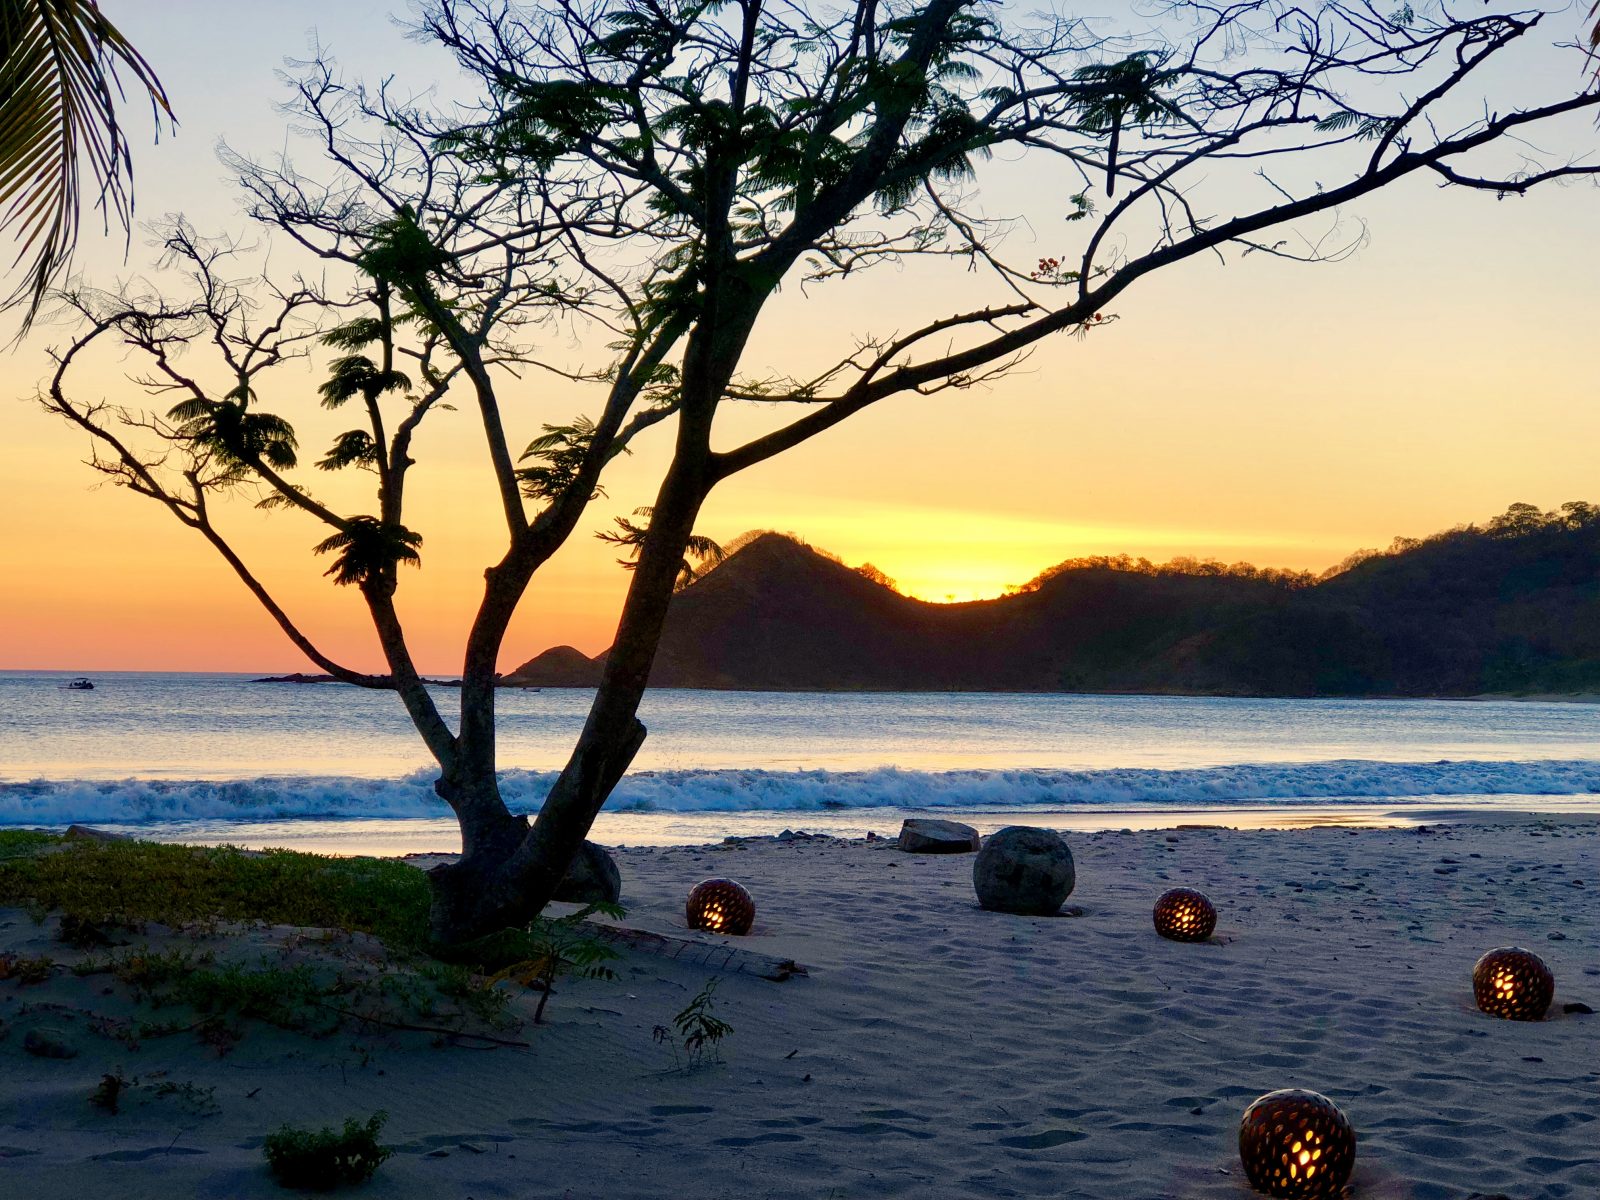 A sunset to remember at Morgan's Rock, Nicaragua